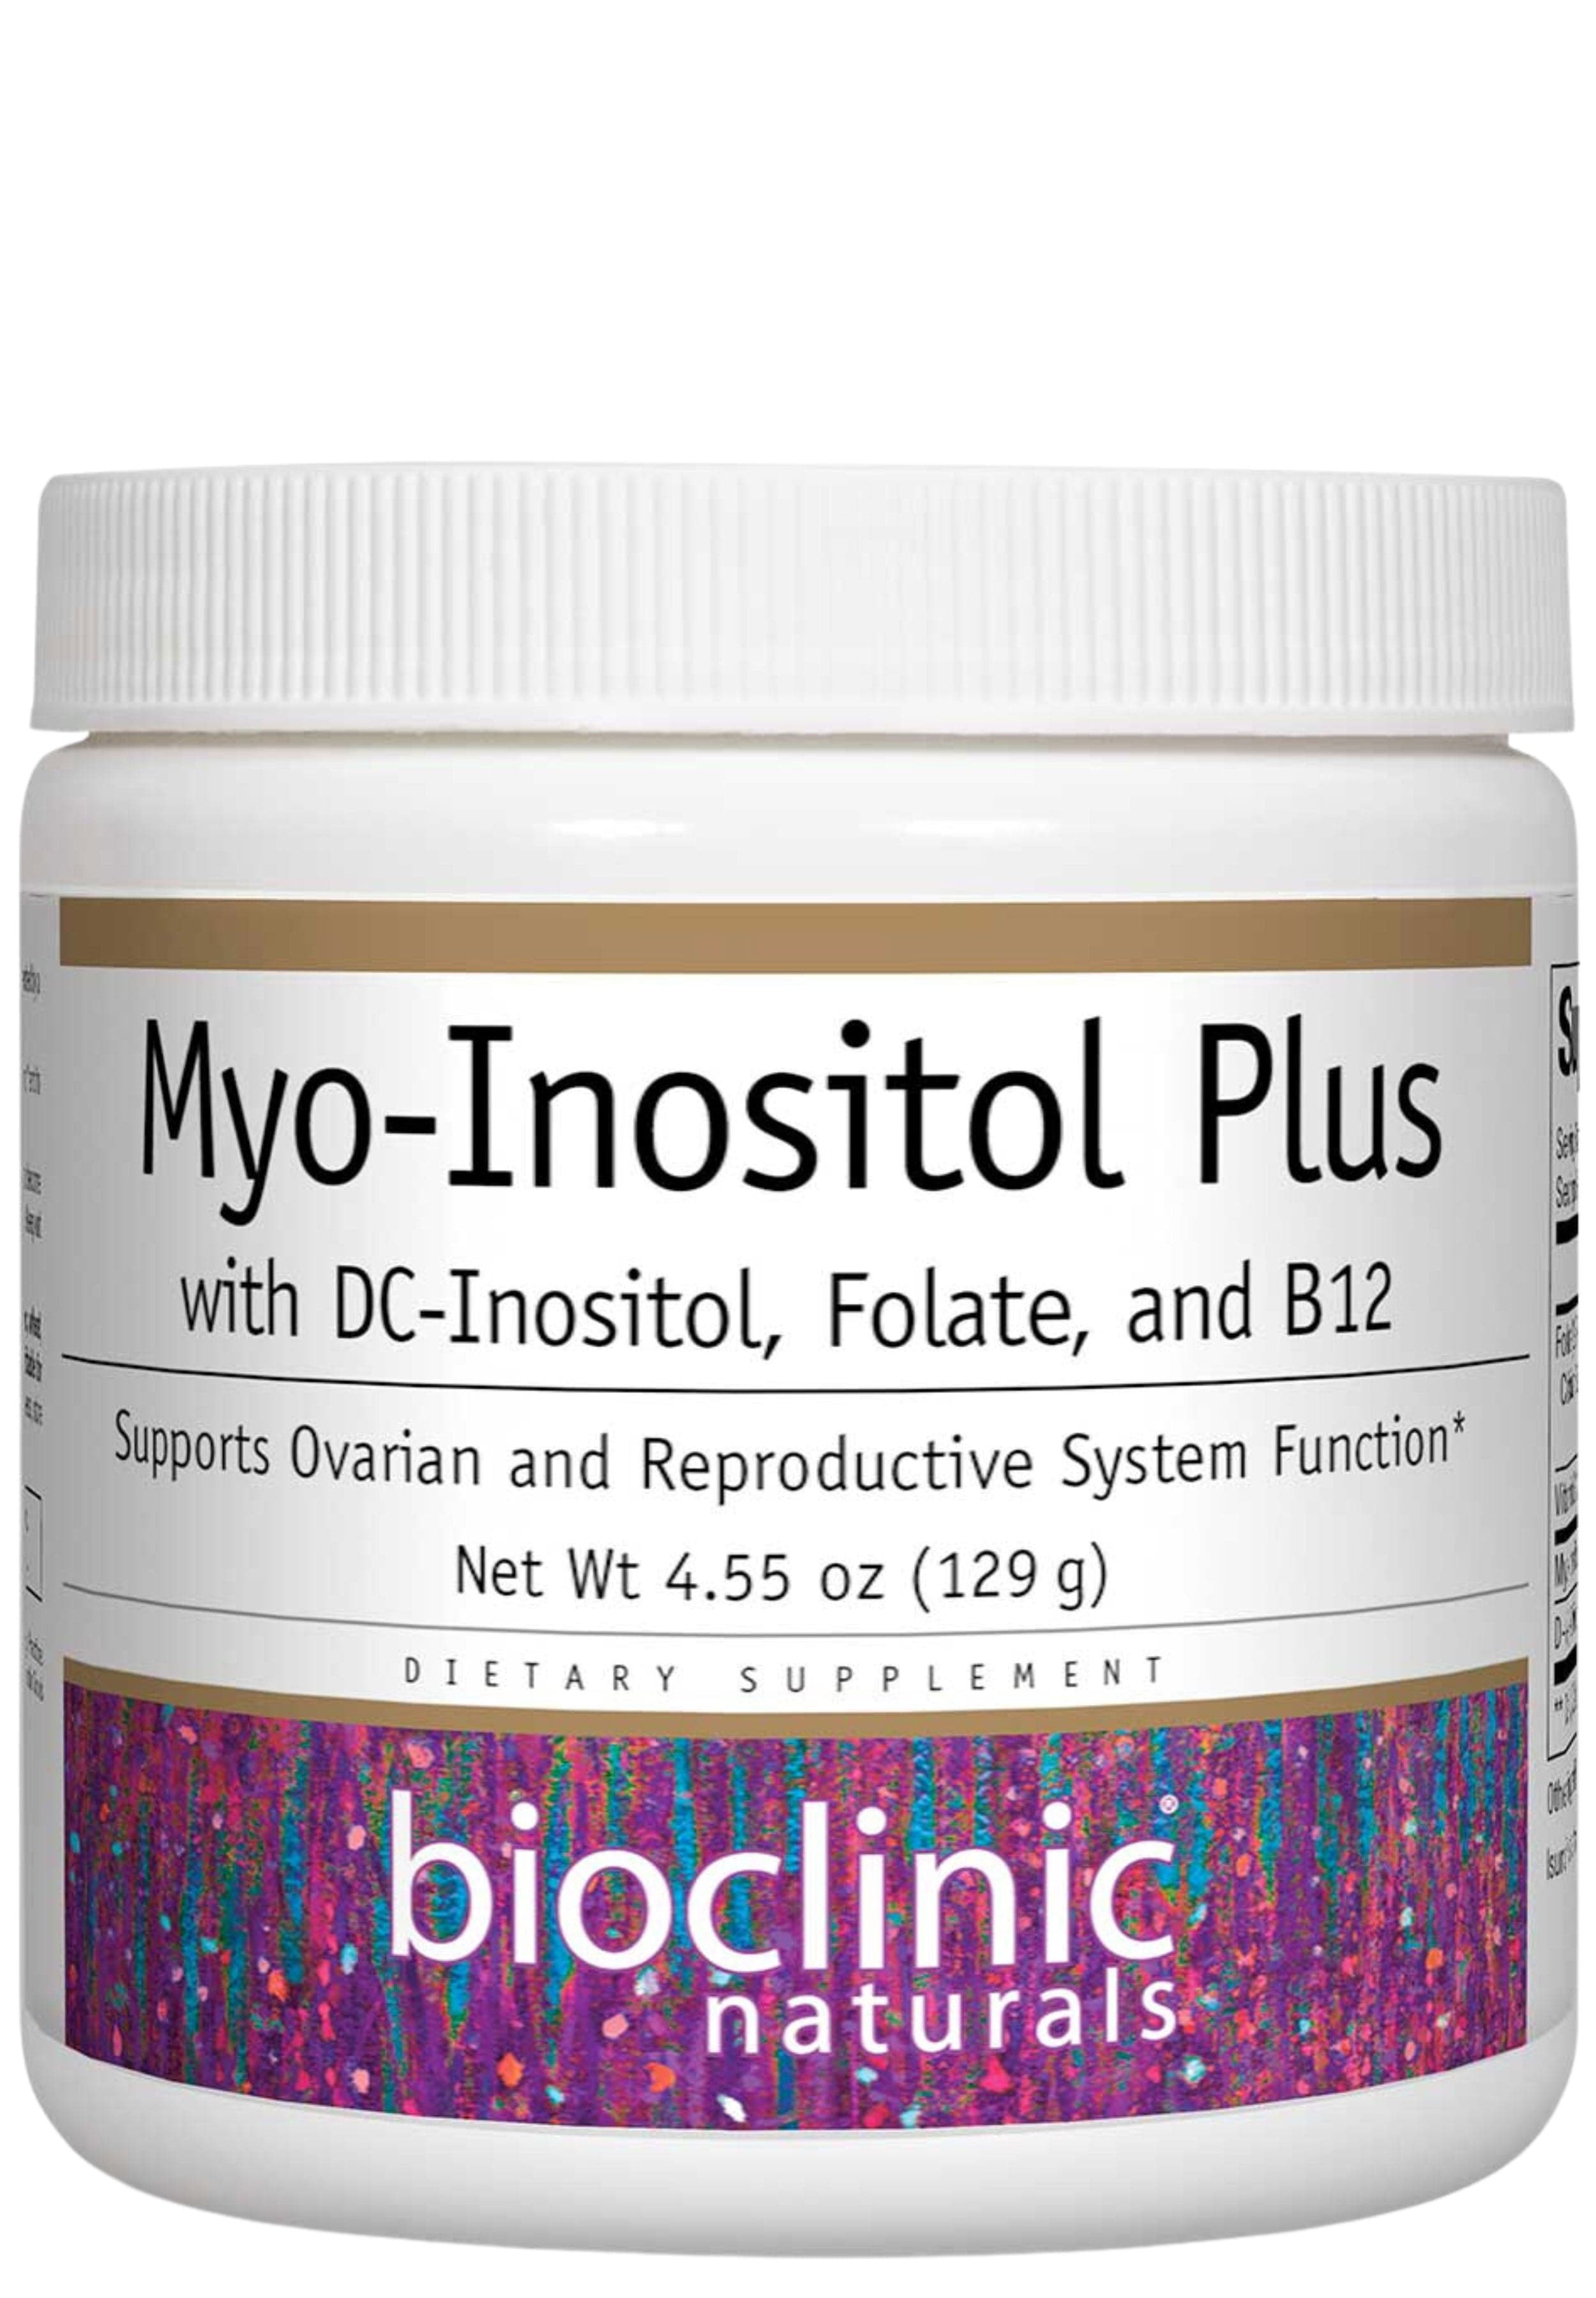 Bioclinic Naturals Myo-Inositol Plus